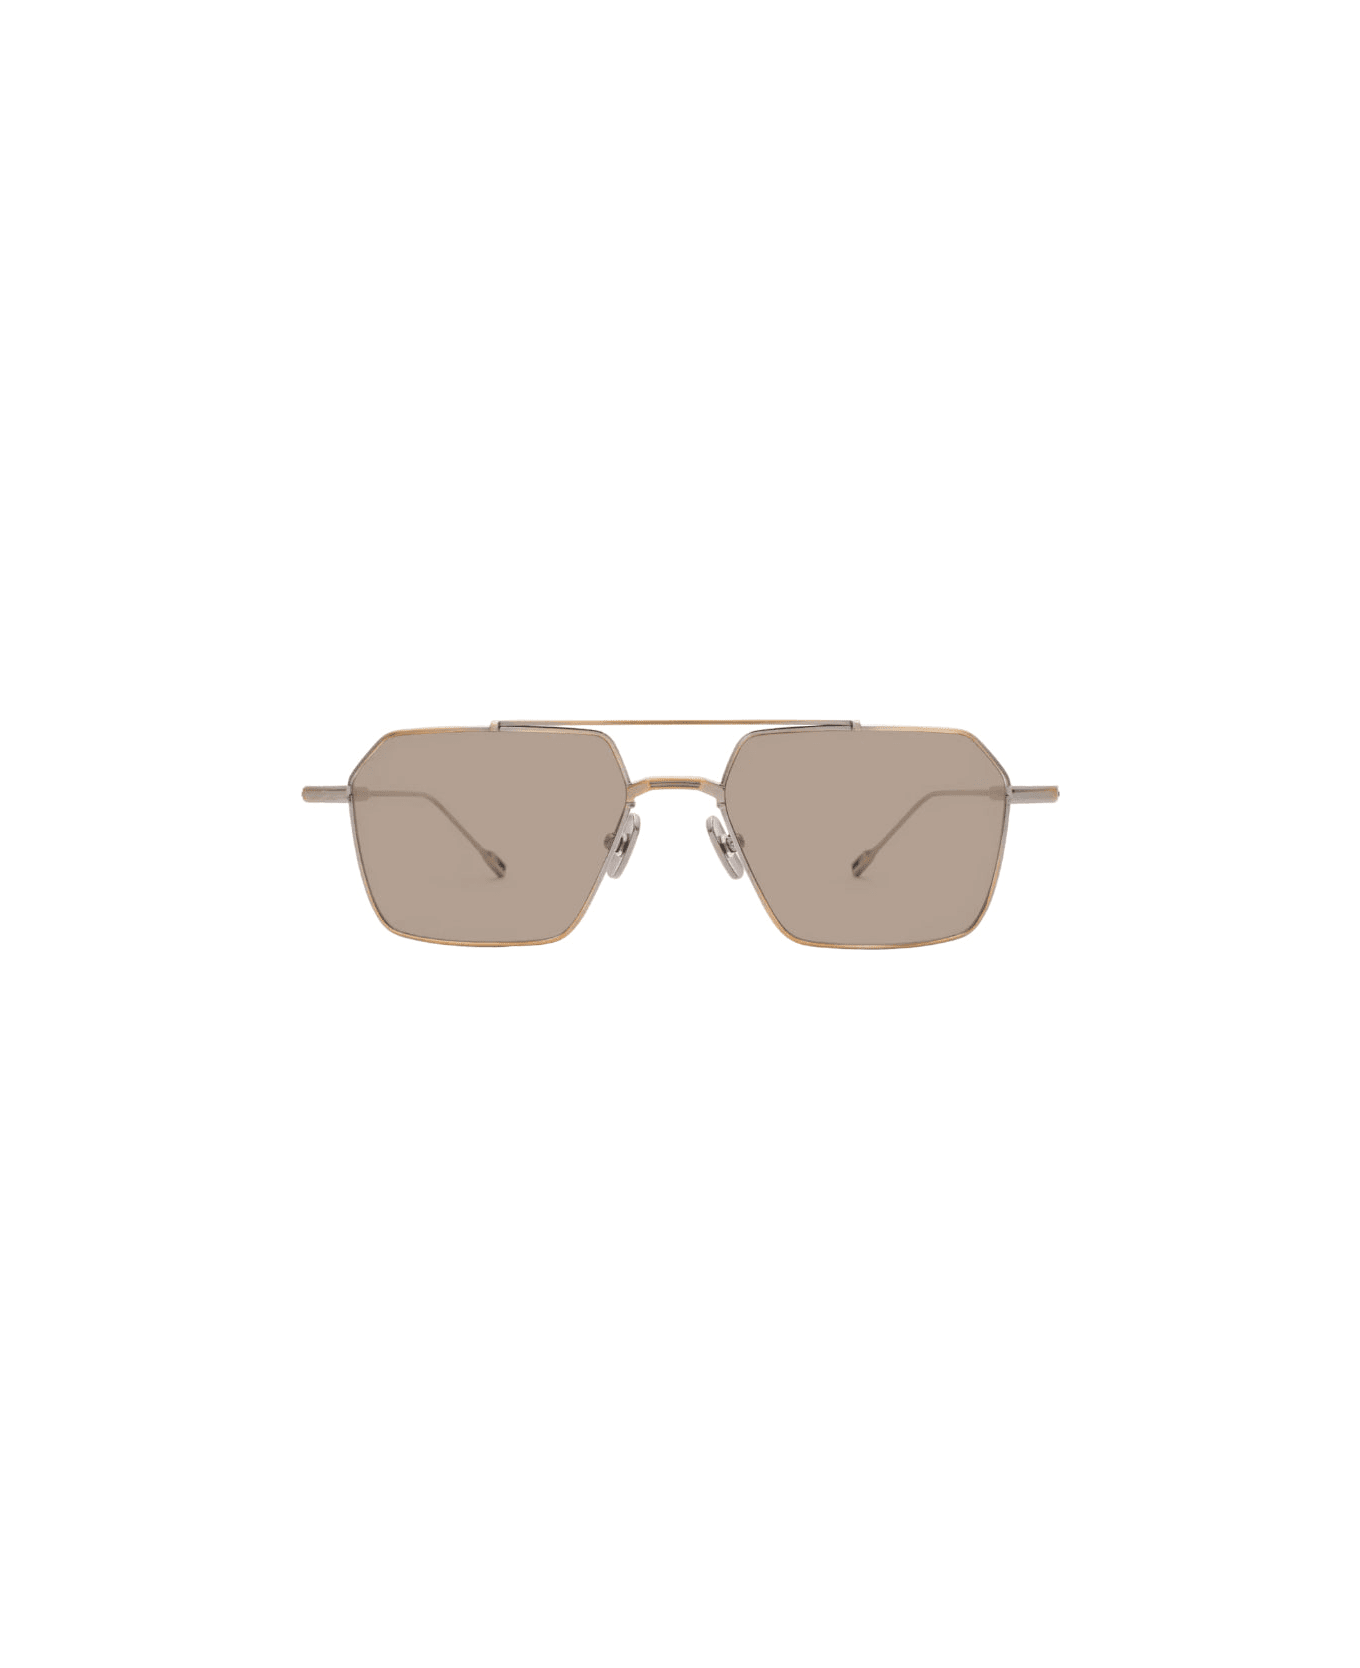 Native Sons Remm - Antique Gold - 52 Sunglasses サングラス